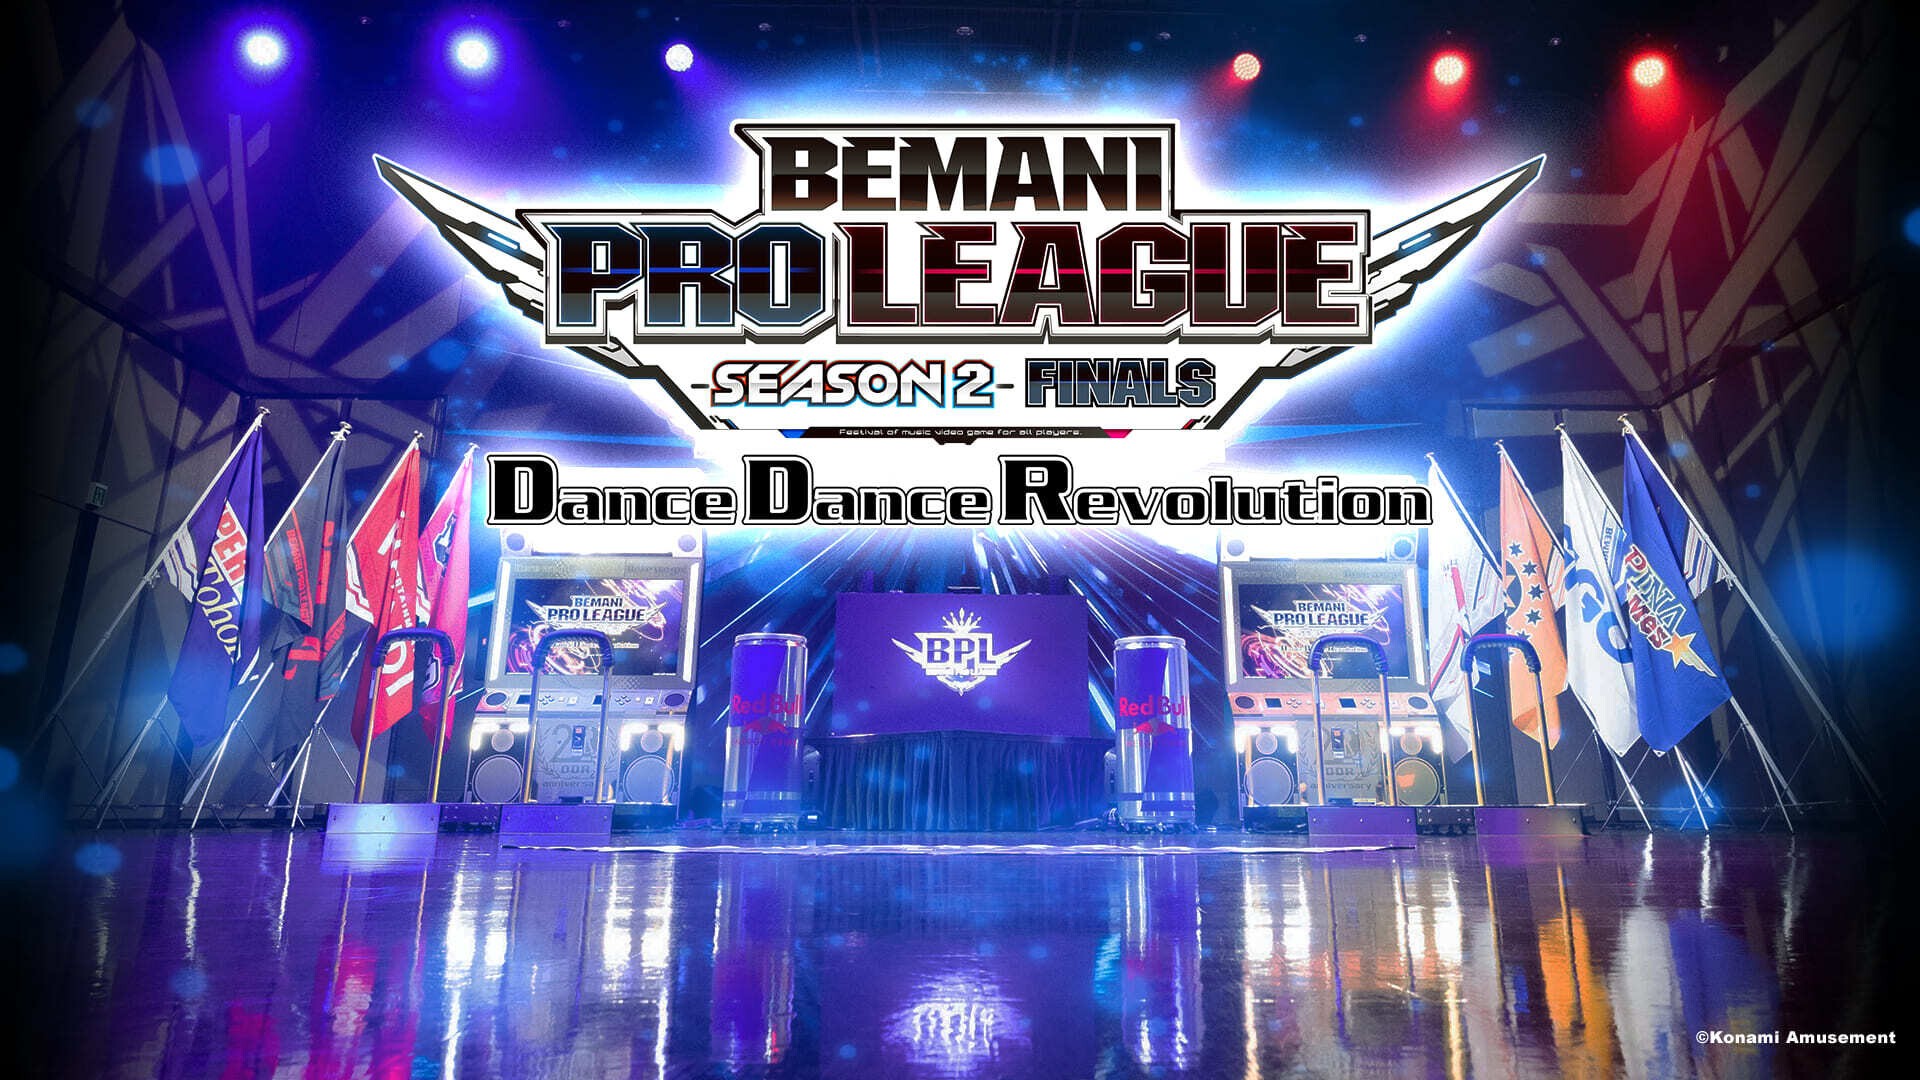 BEMANI PRO LEAGUE -SEASON 2- DanceDanceRevolution FINALS | Zaiko